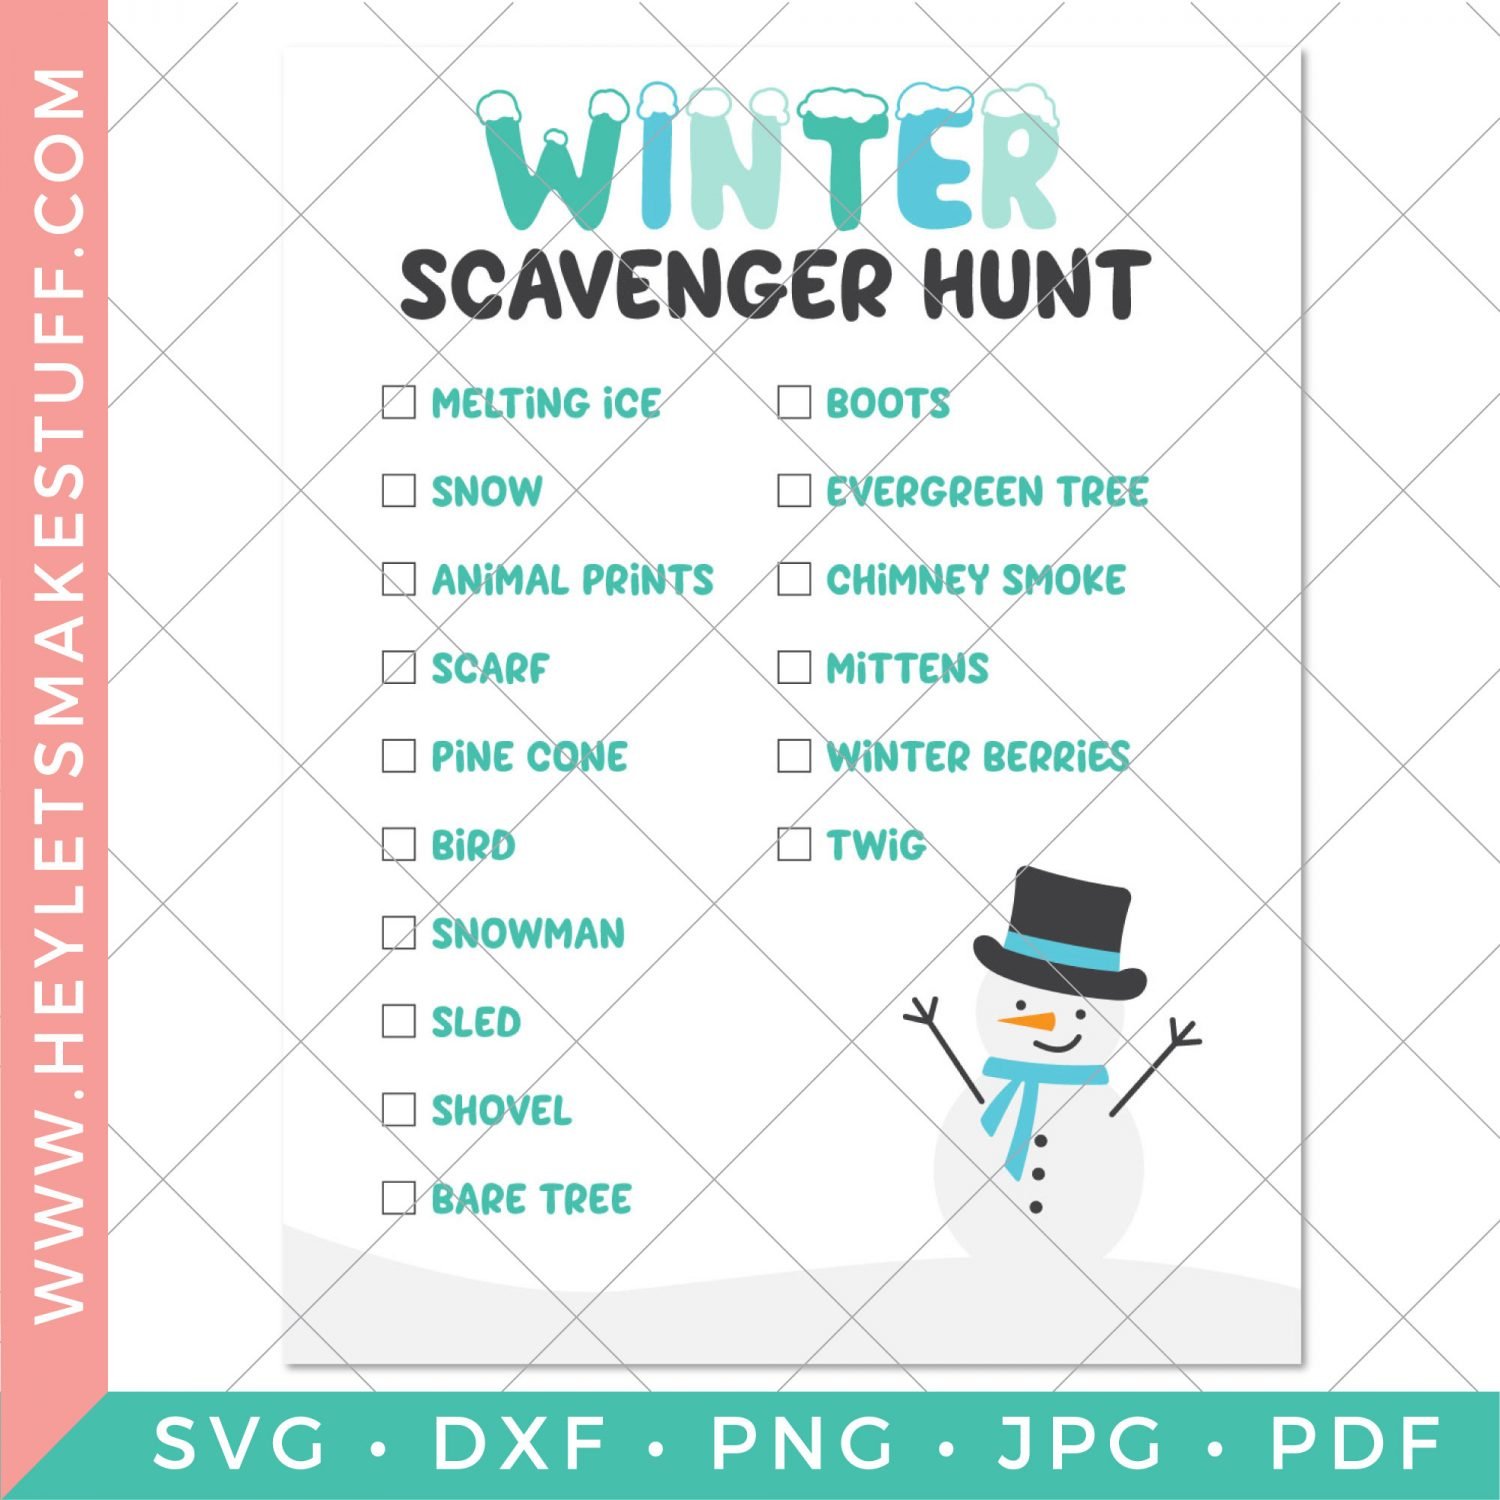 Security image for Winter Scavenger Hunt